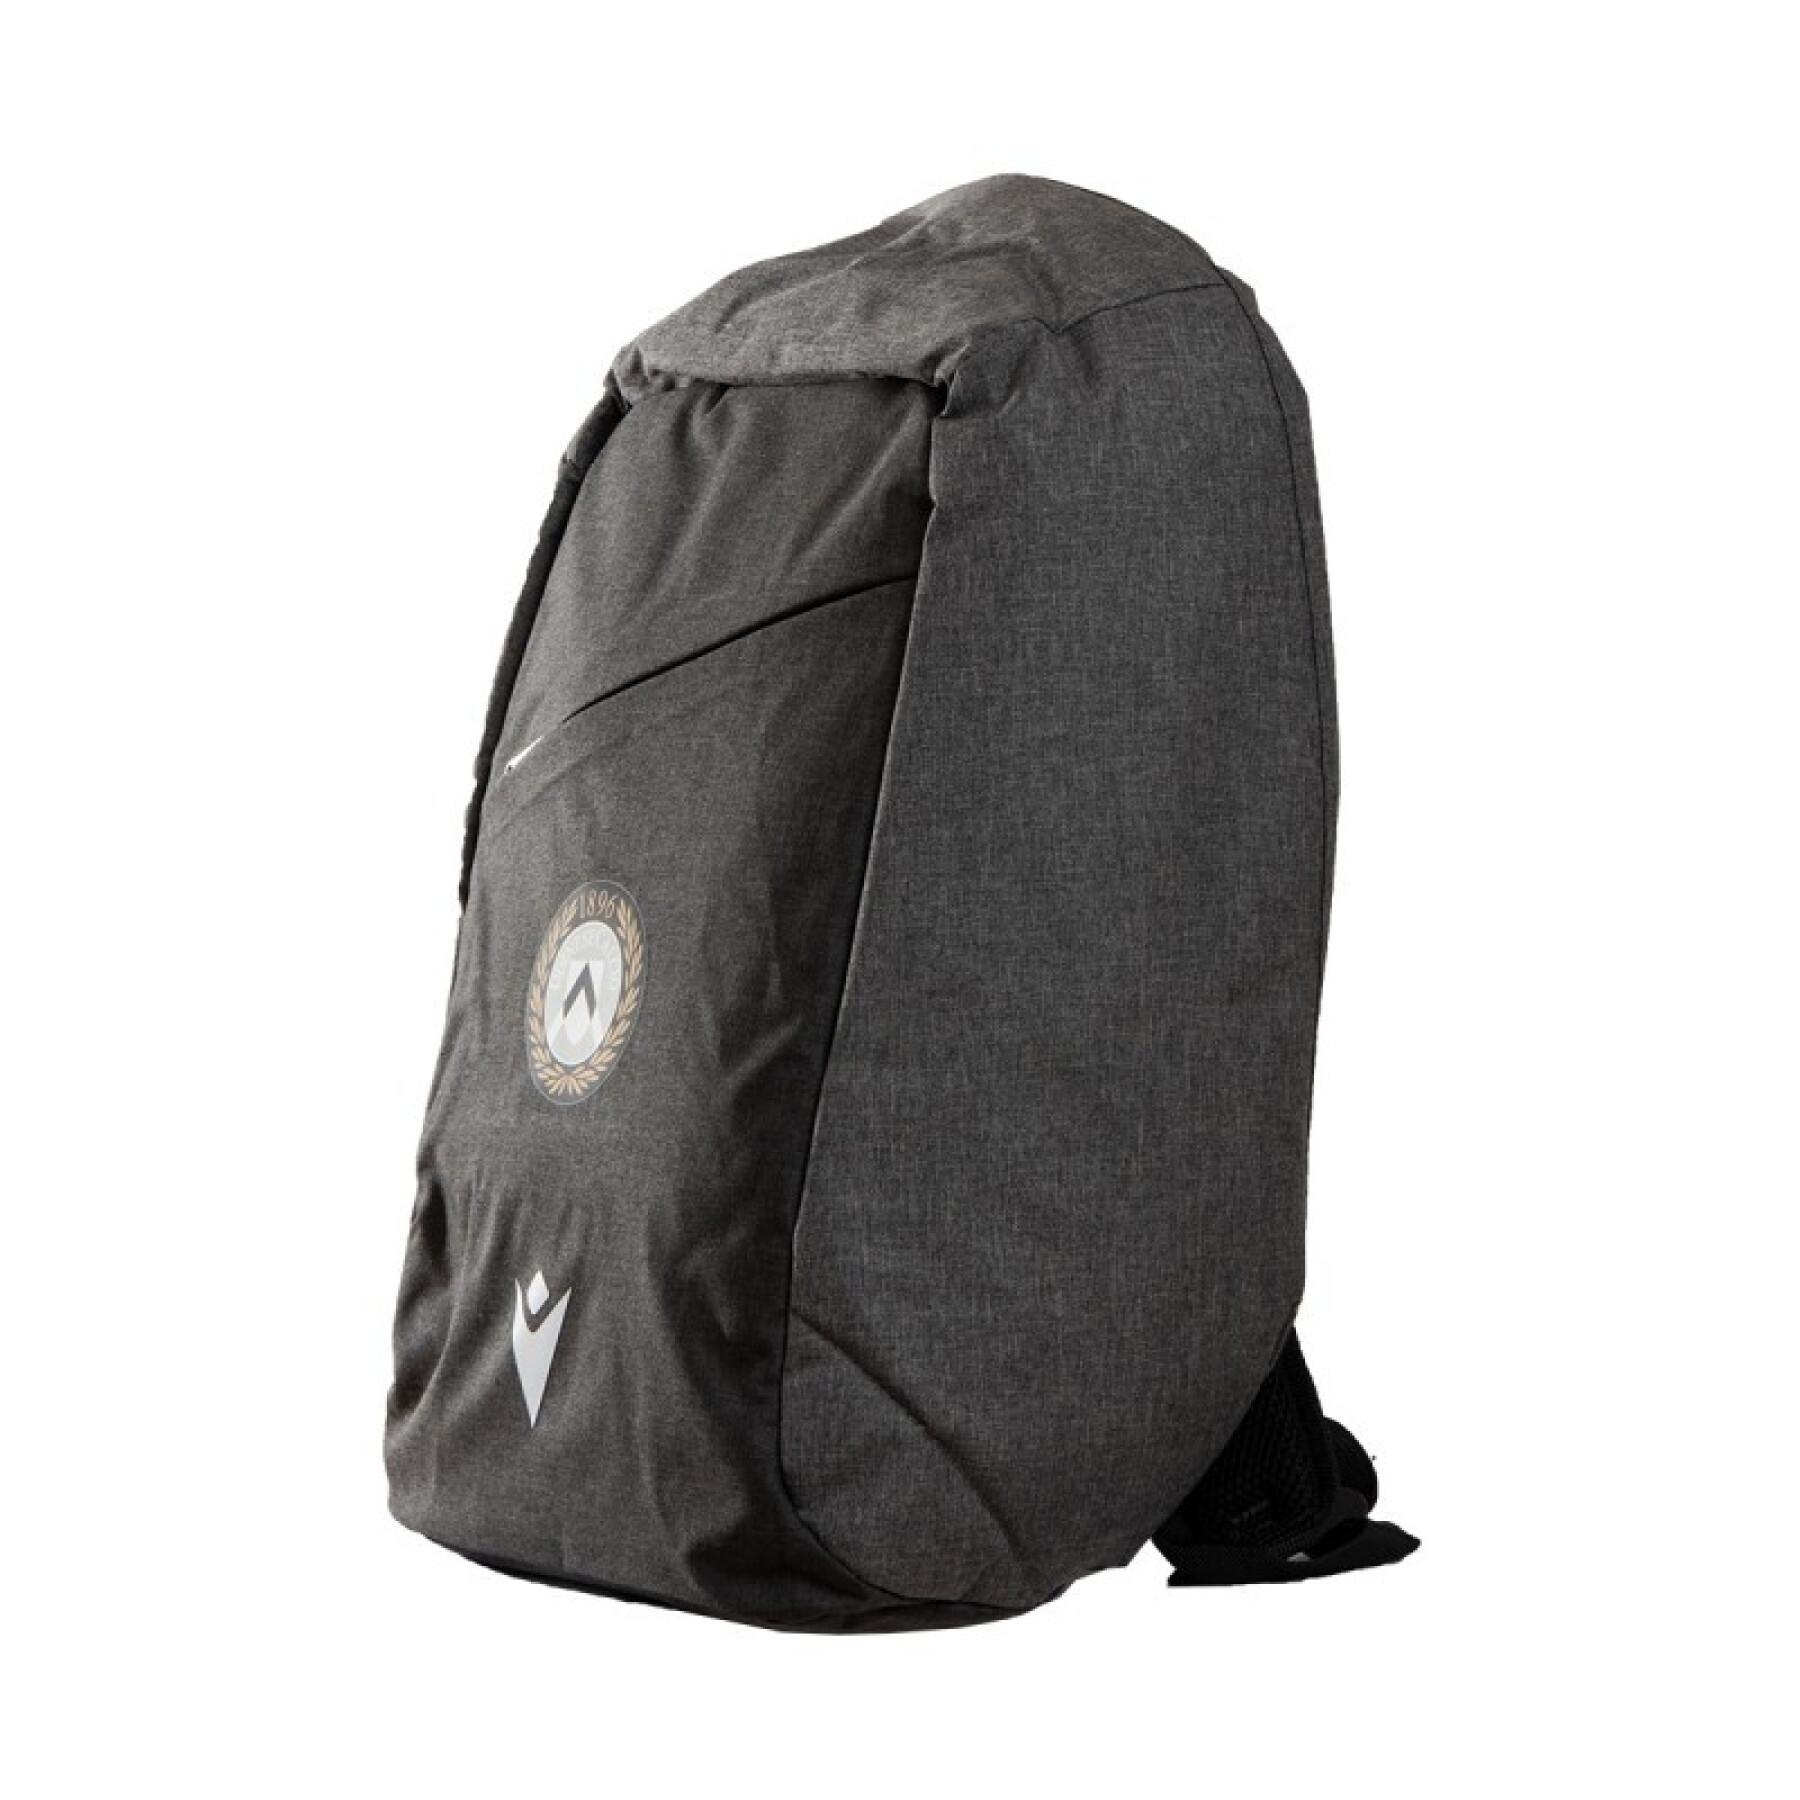 Backpack Udinese 2020/21